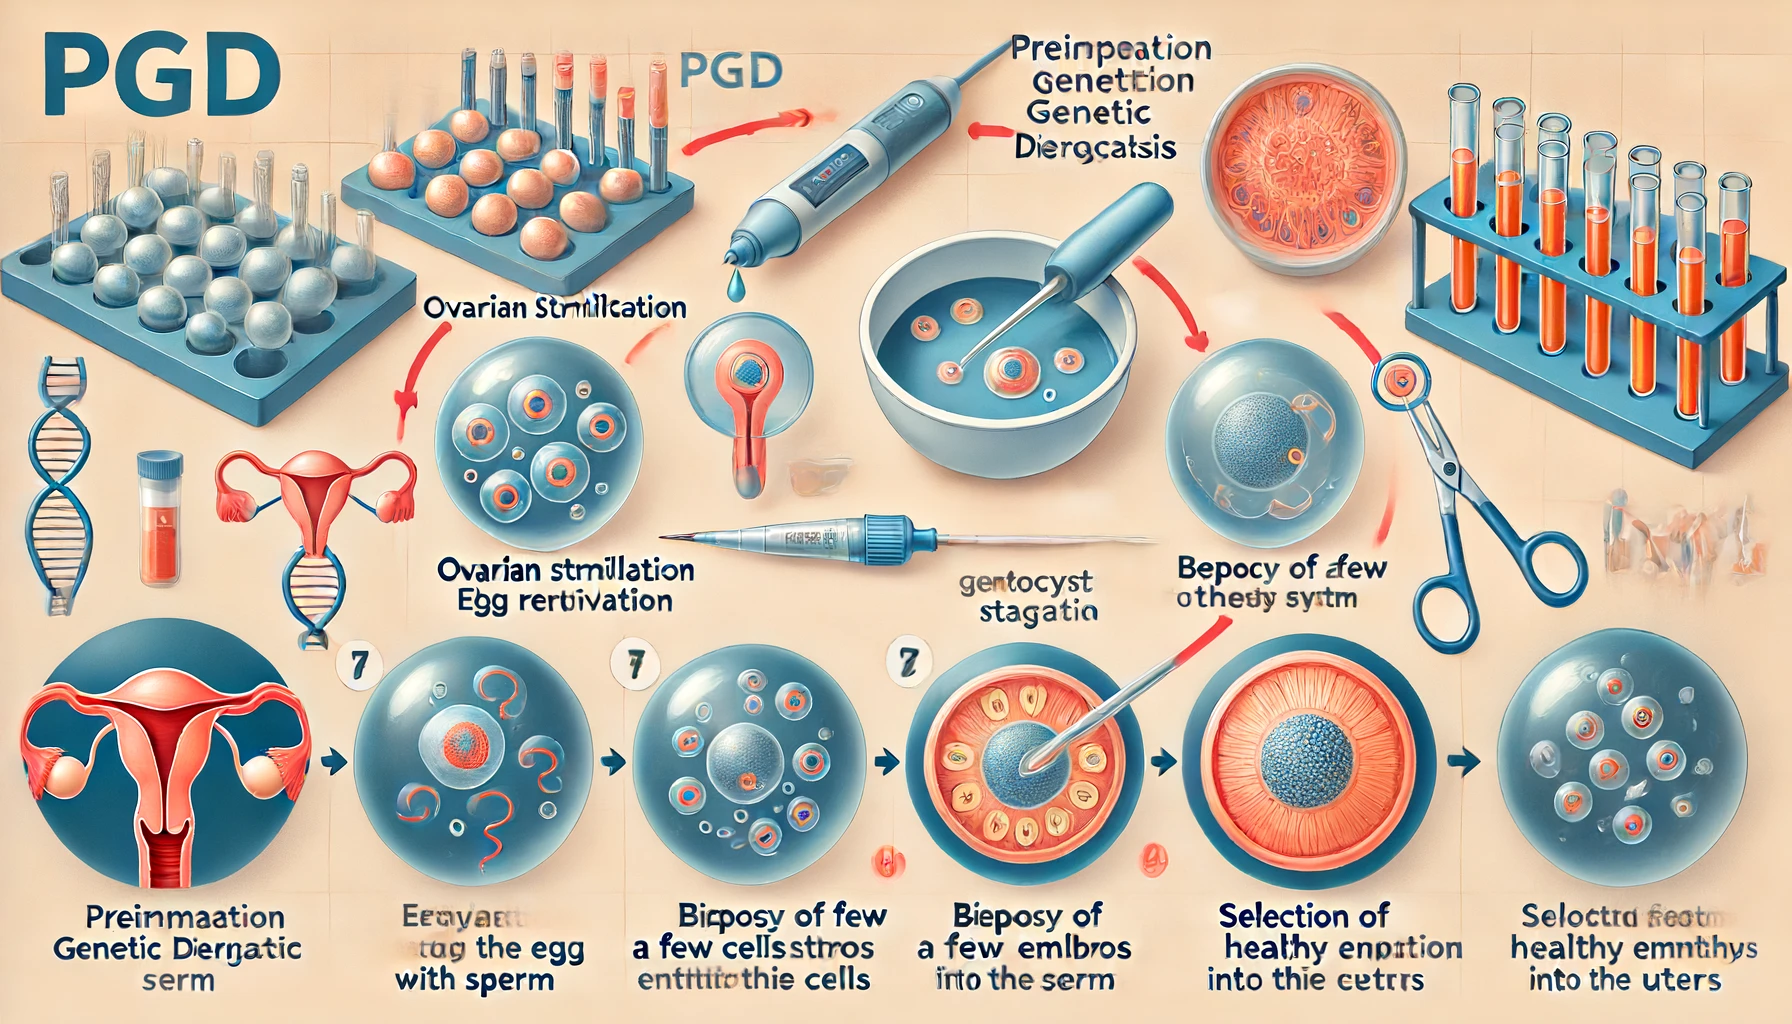 Preimplantation genetic diagnosis (PGD)